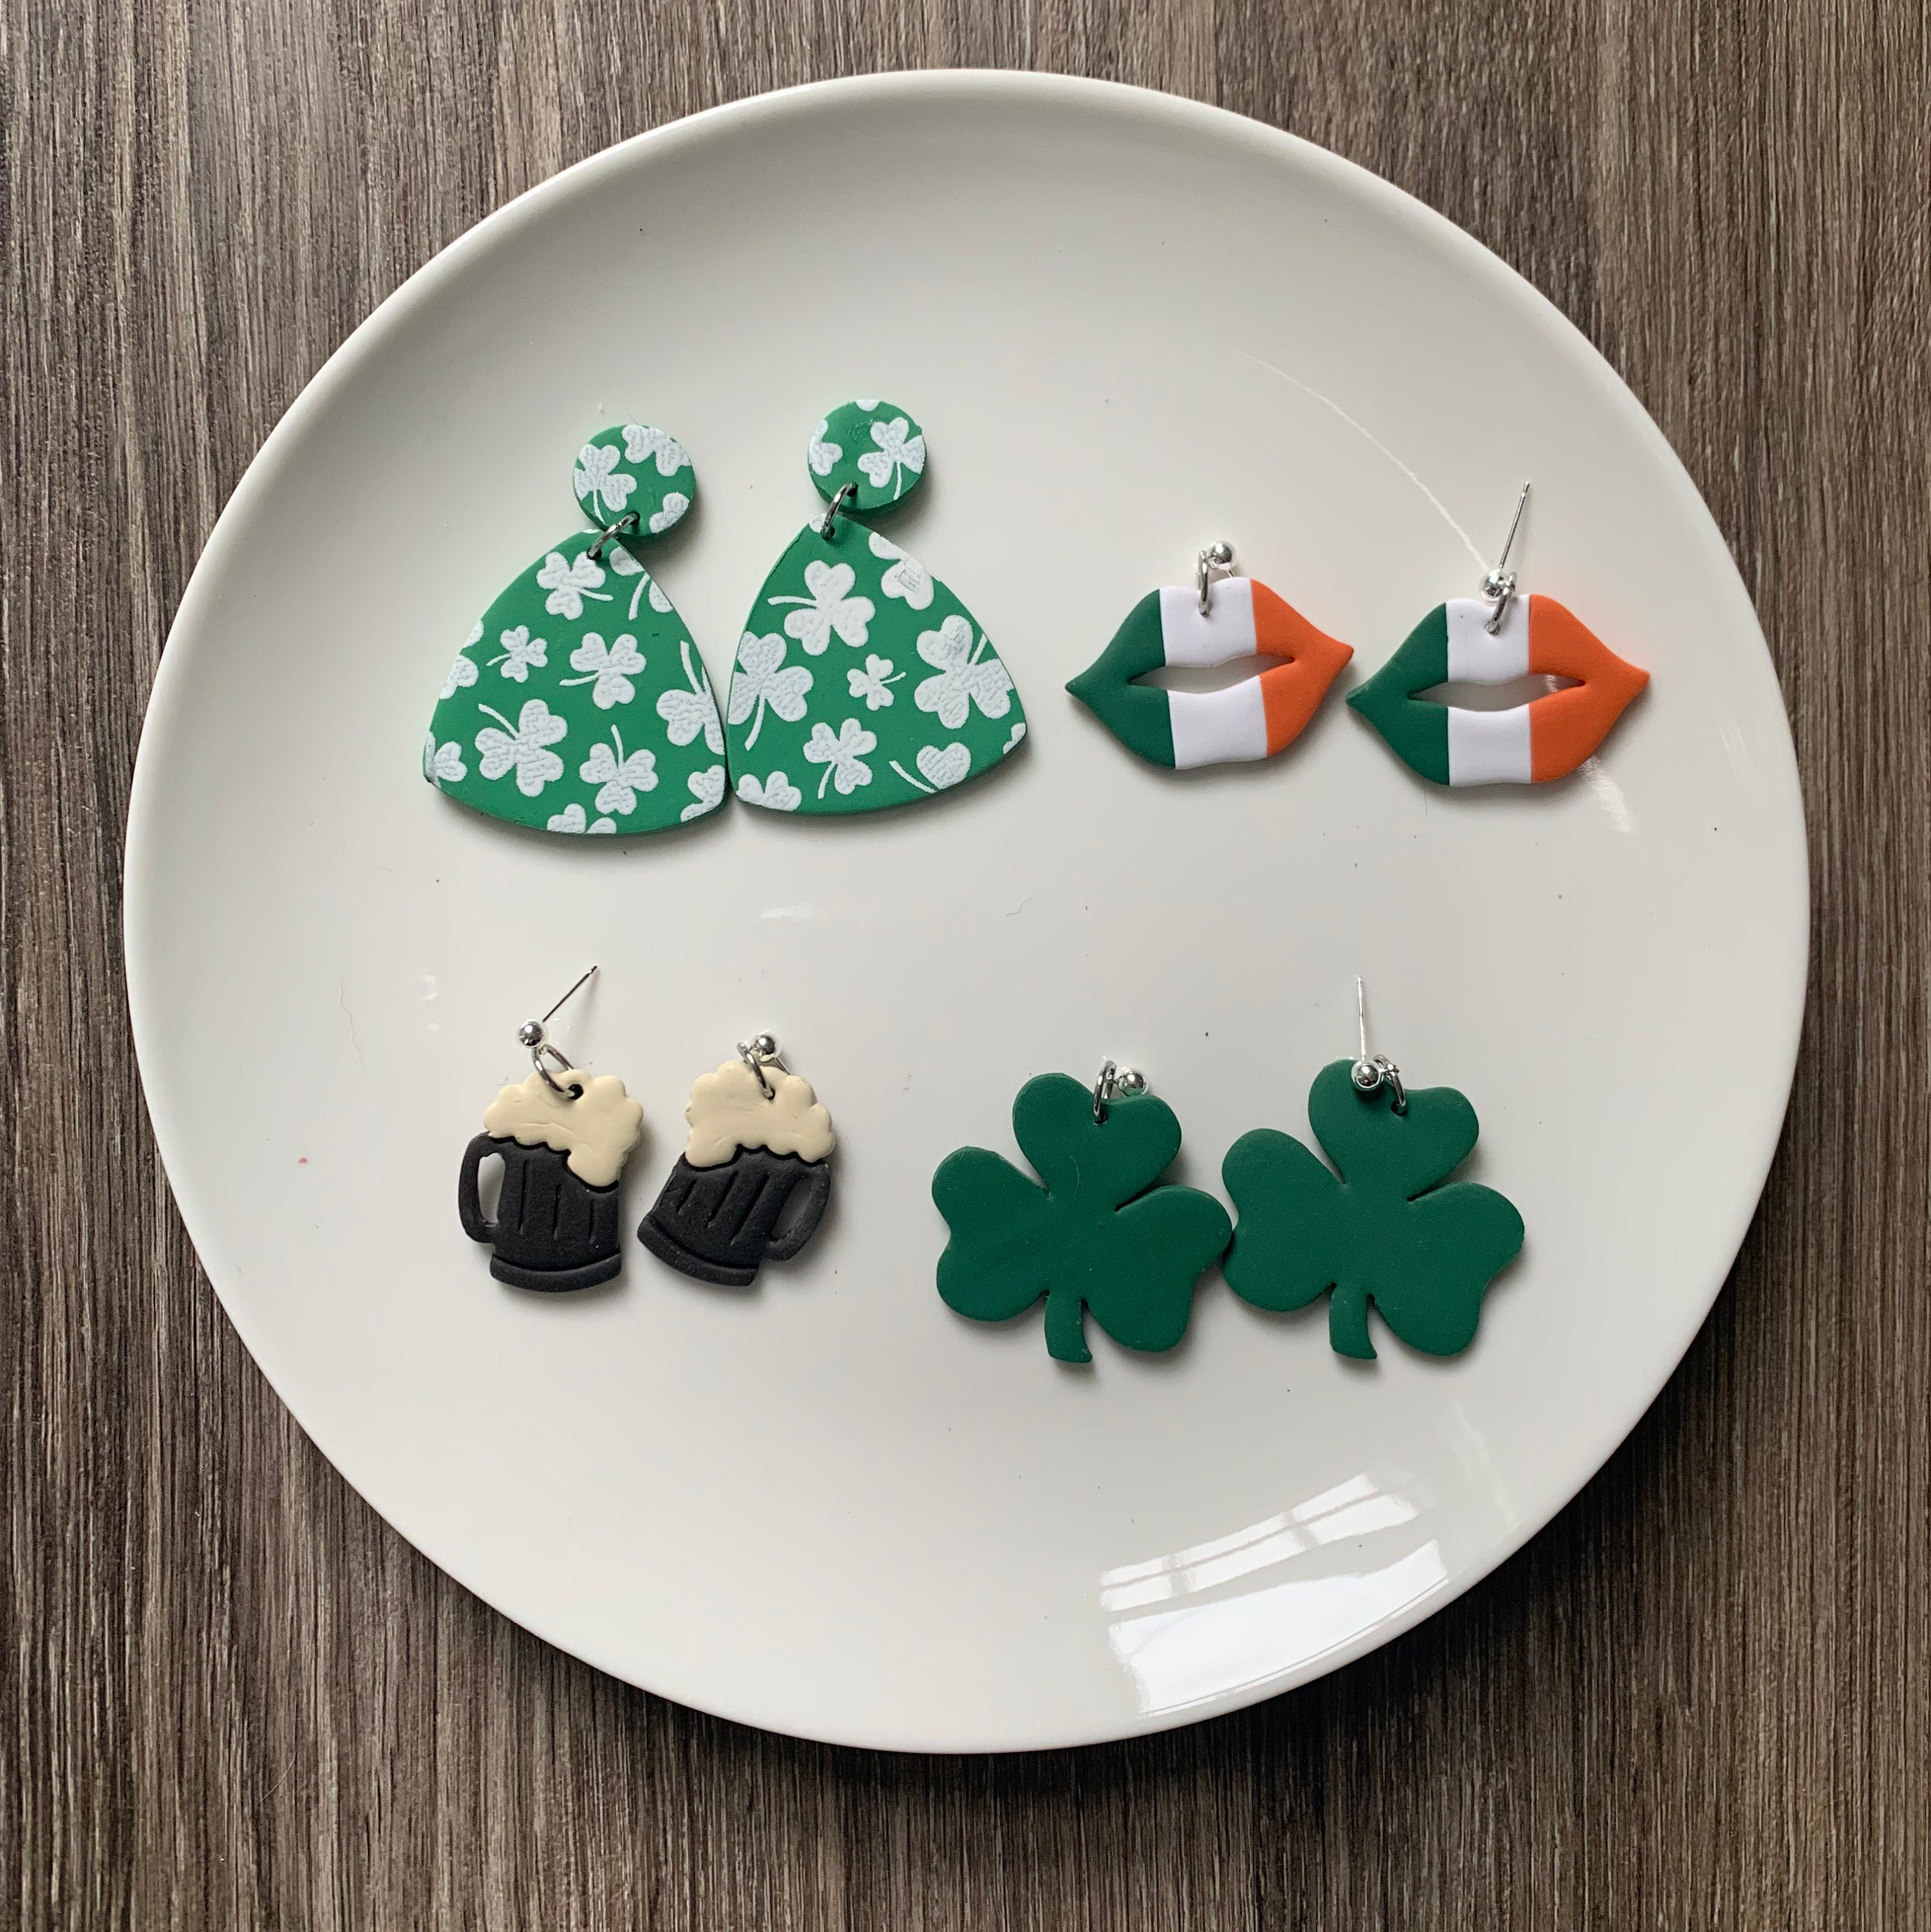 St. Patrick's Day Earrings - Clay Earrings - Jewelry Gifts